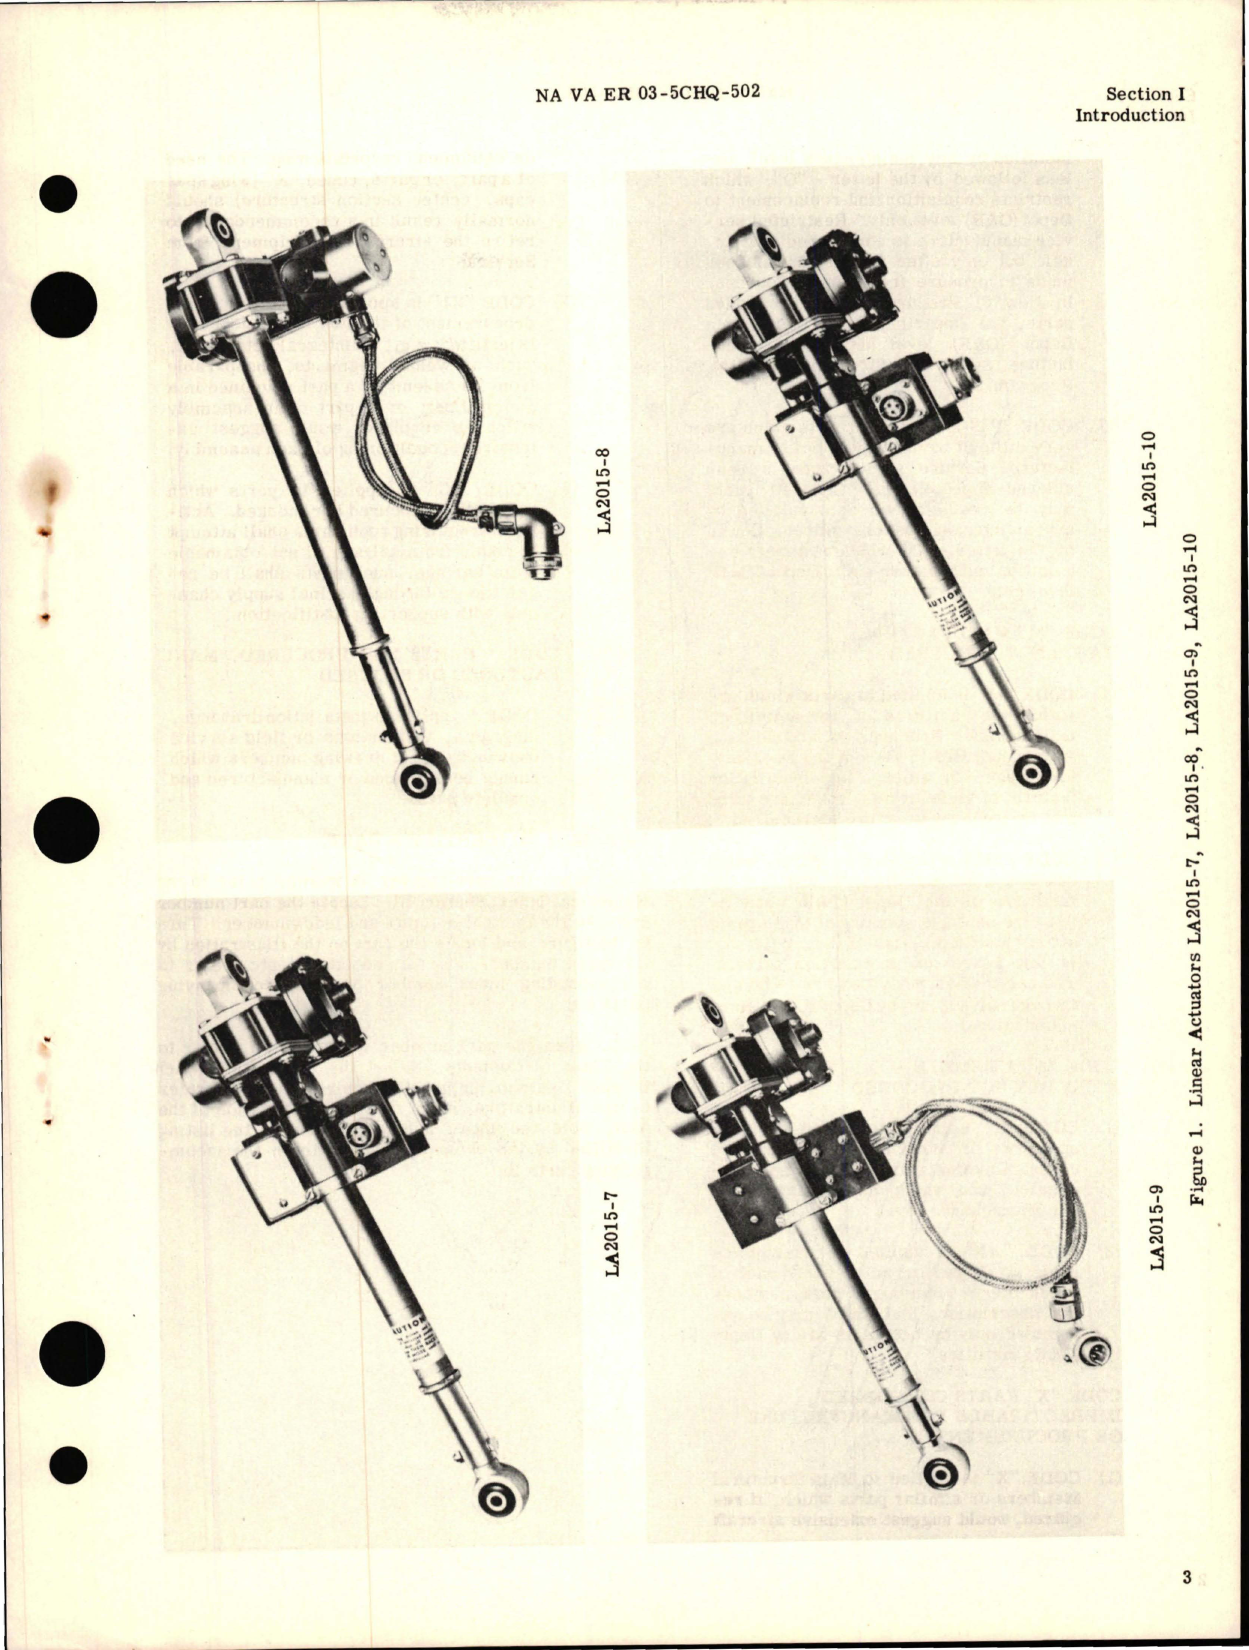 Sample page 5 from AirCorps Library document: Illustrated Parts Breakdown for Linear Actuators LA 2015-7, LA 2015-8, LA 2015-9, and LA 2015-10